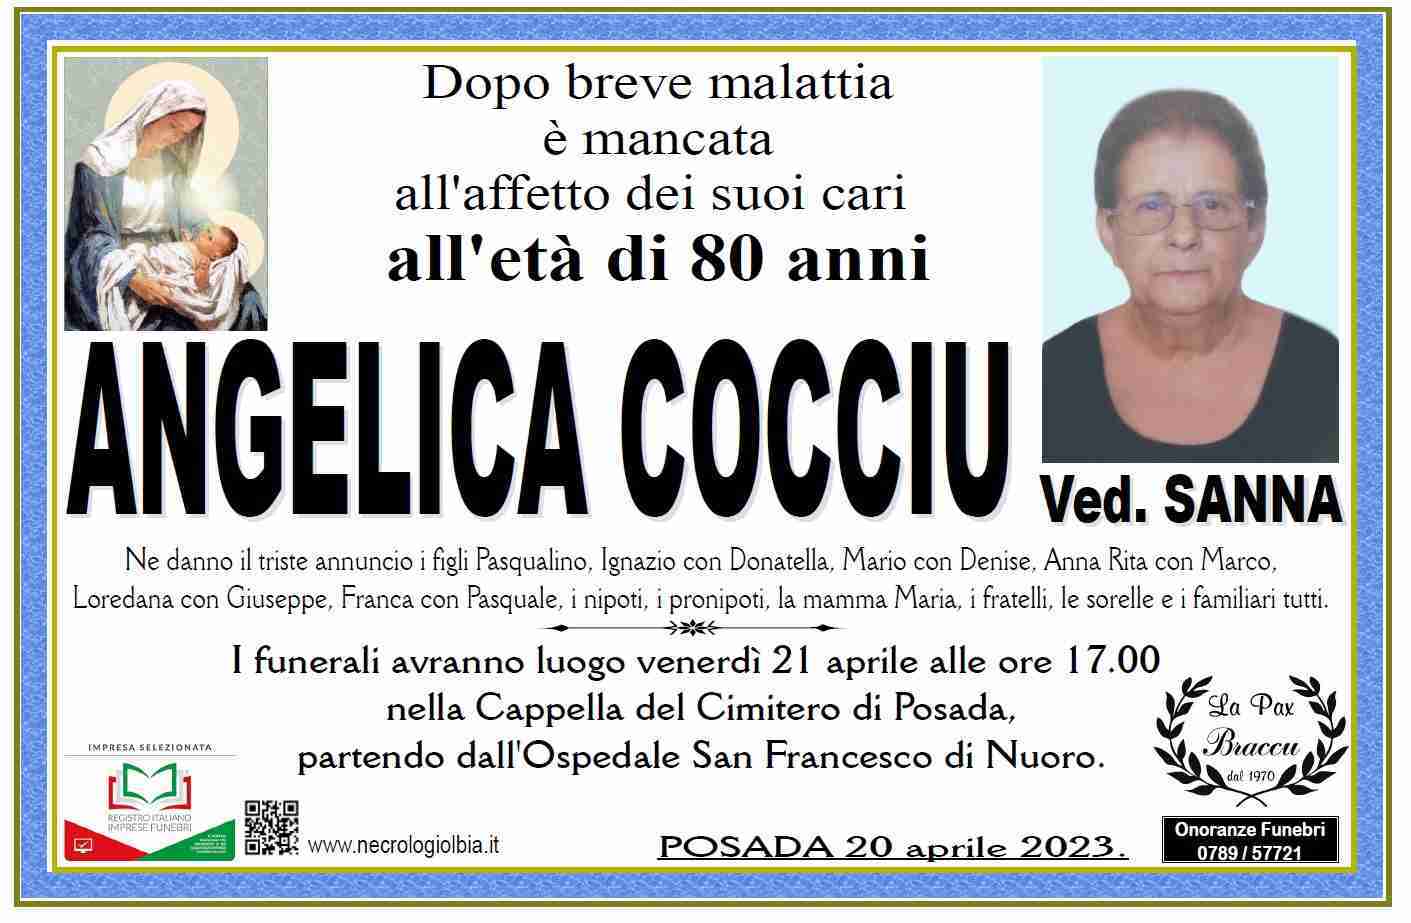 Angelica Cocciu